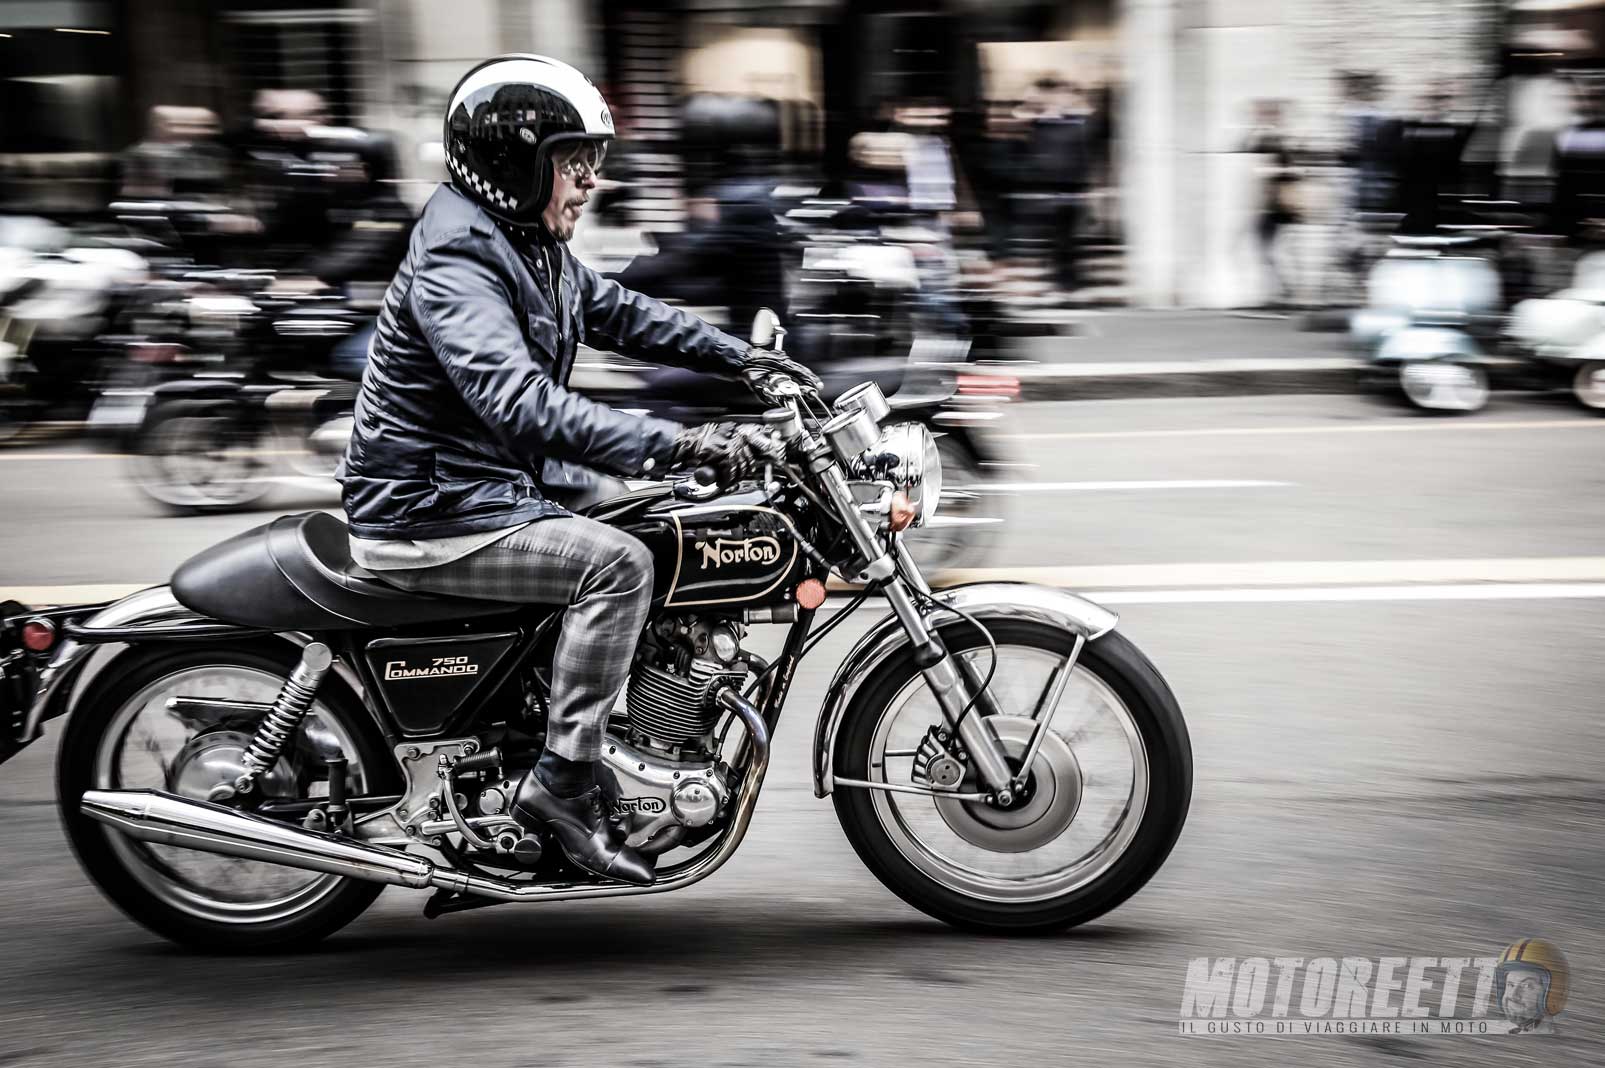 Distinguished Gentleman's Ride 2015 Milano Serra - Motoreetto 22